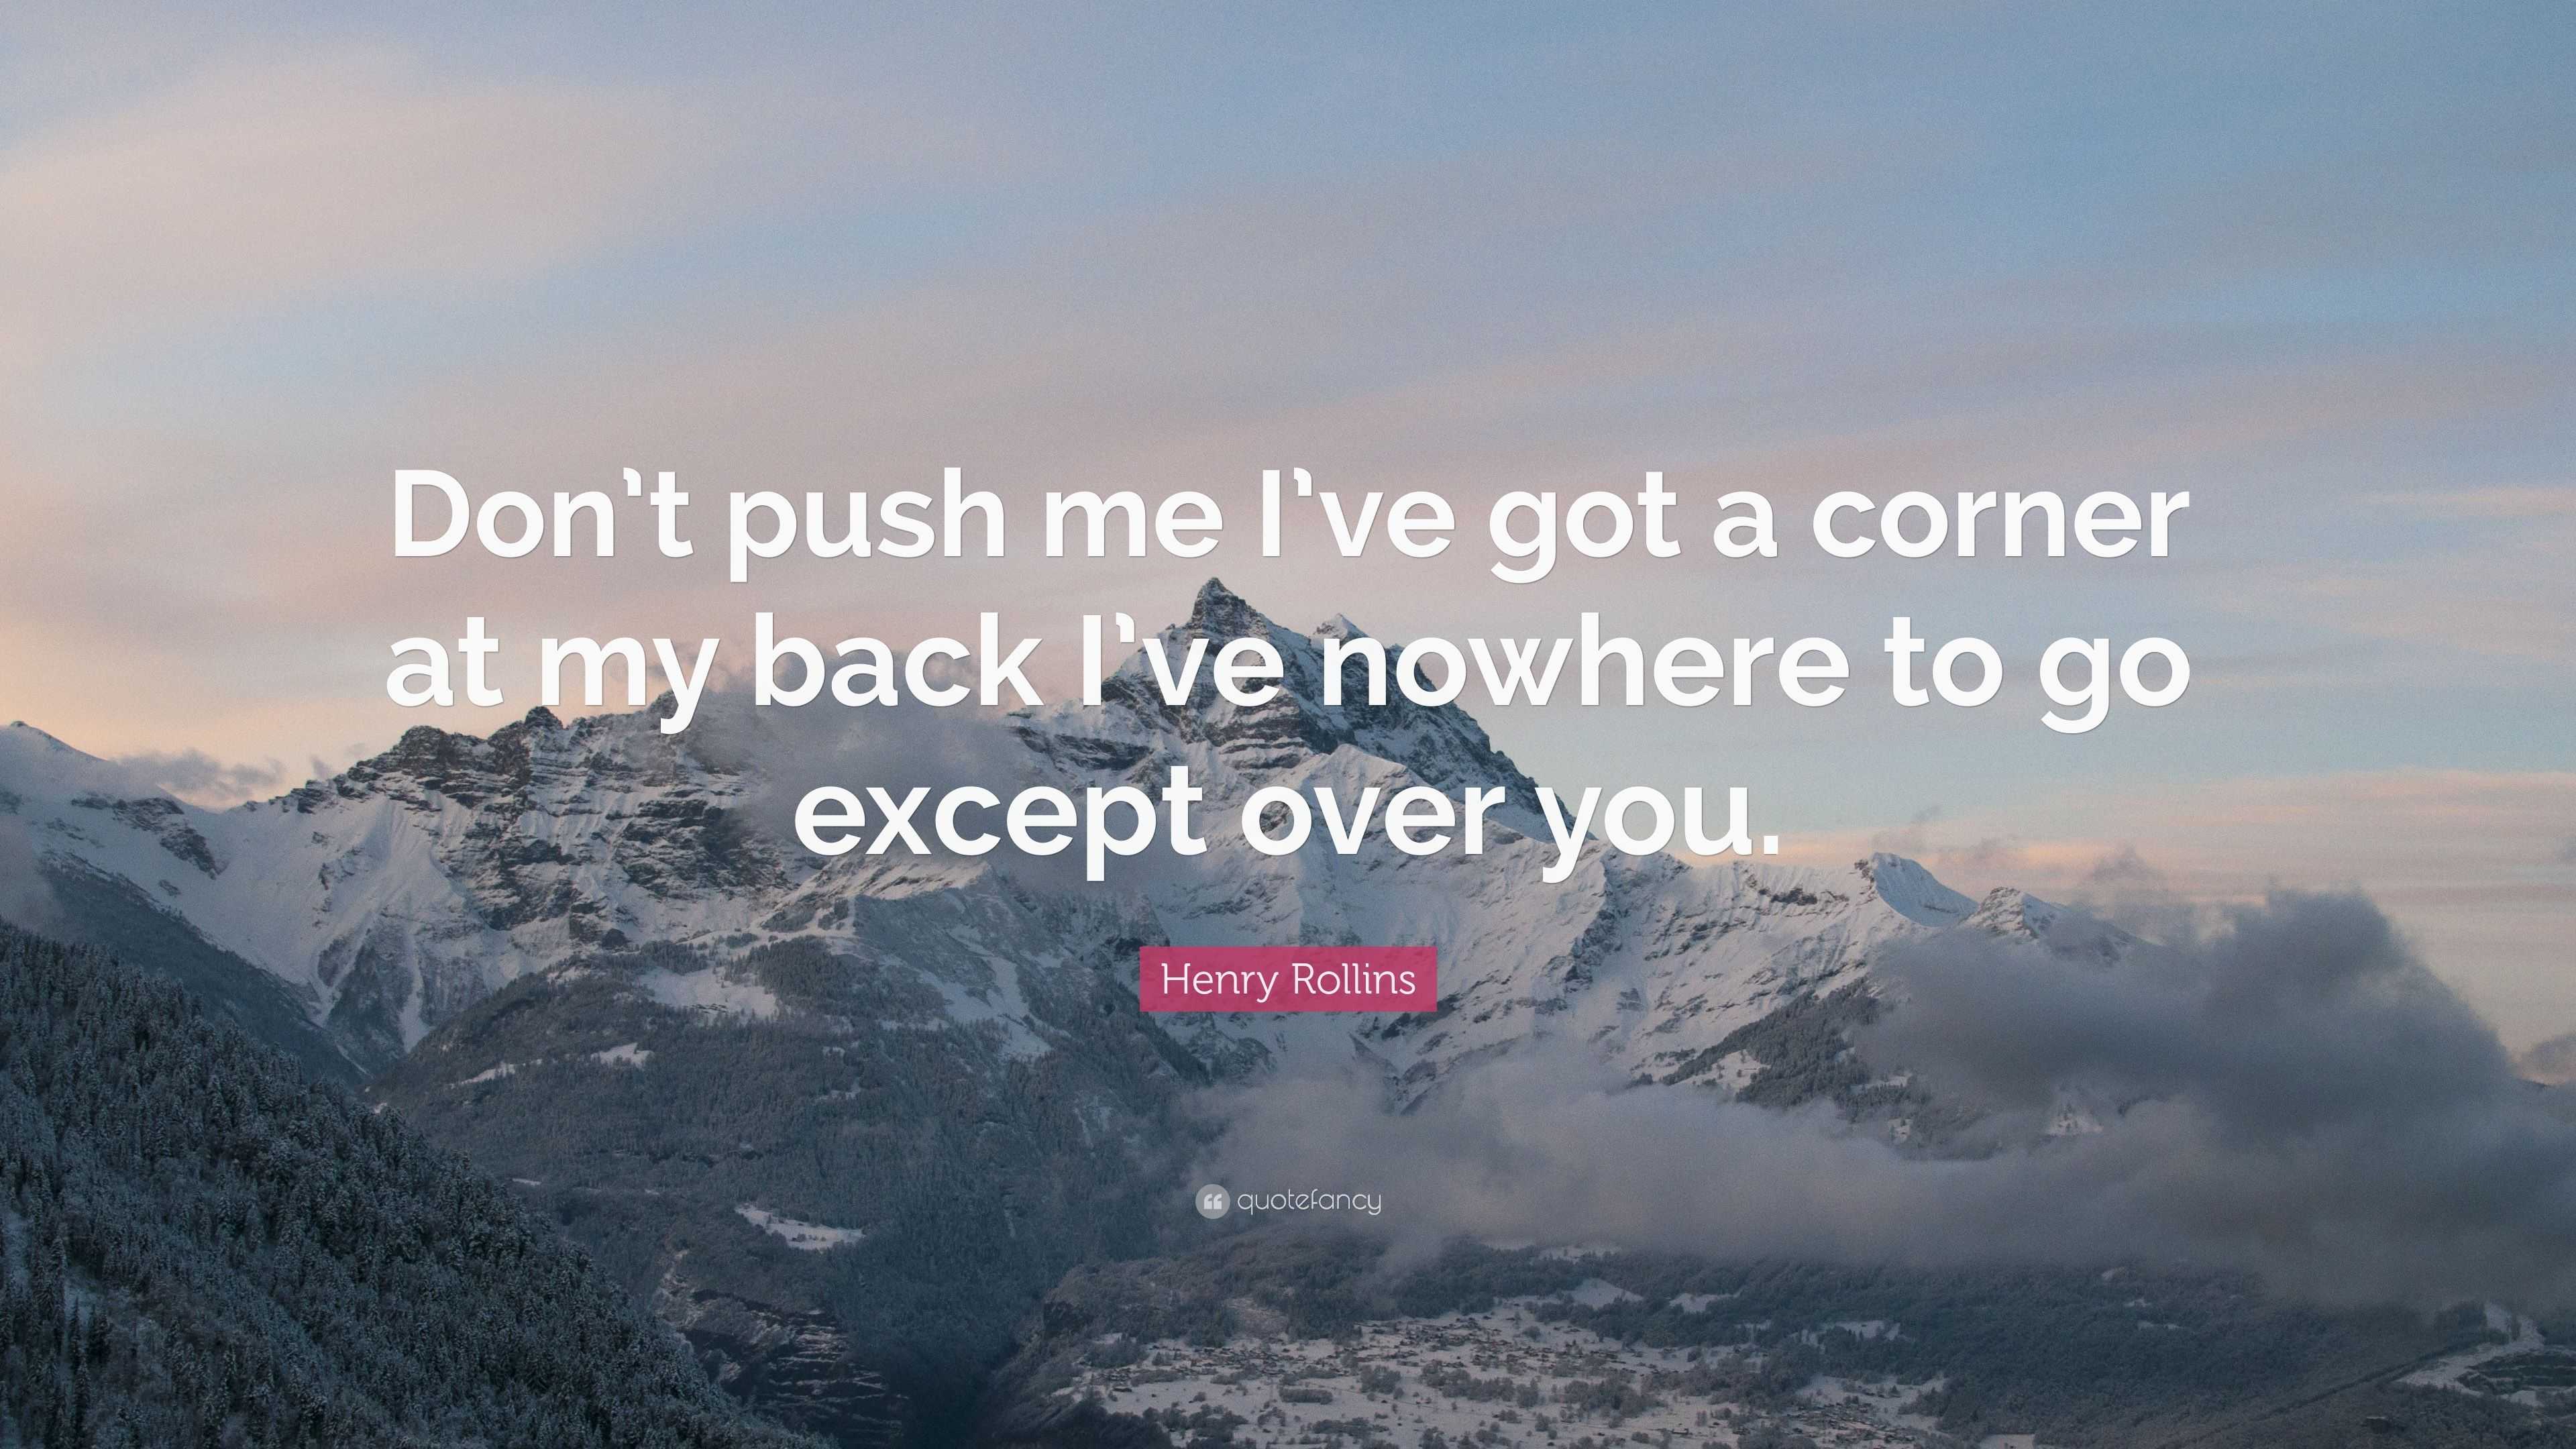 Henry Rollins Quote: “Don’t push me I’ve got a corner at my back I’ve